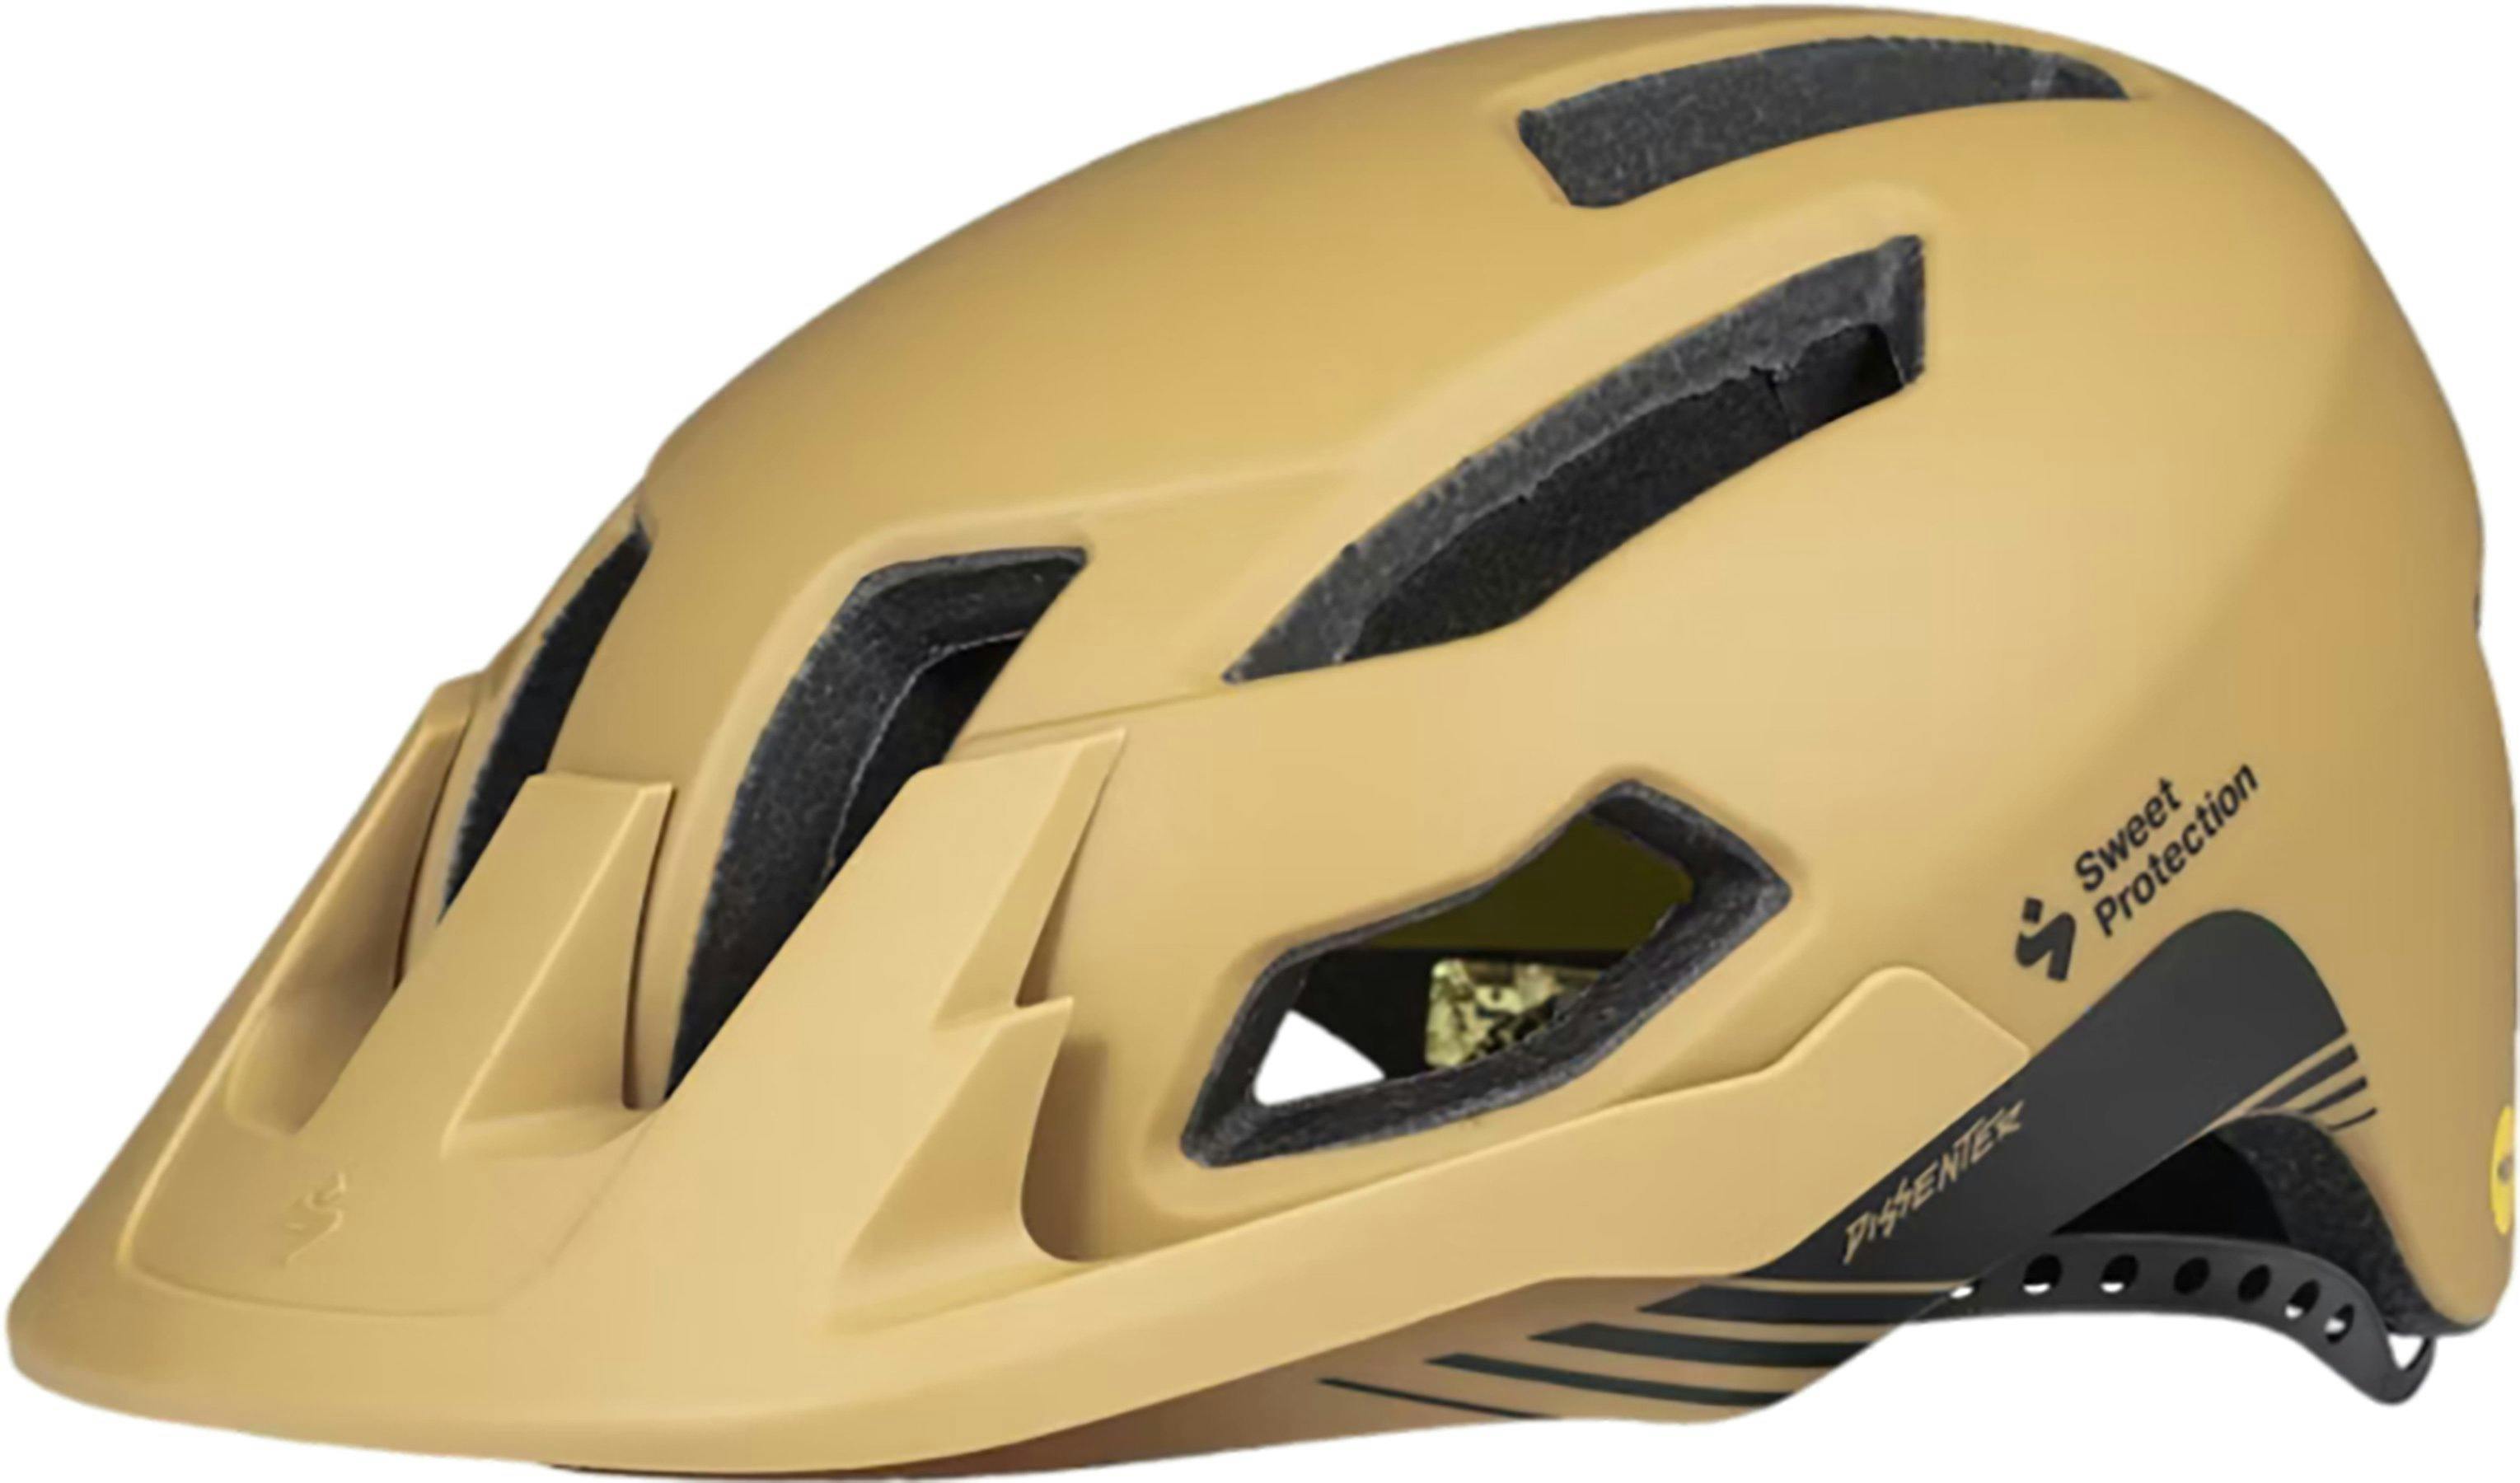 Product image for Dissenter MIPS Helmet - Men’s